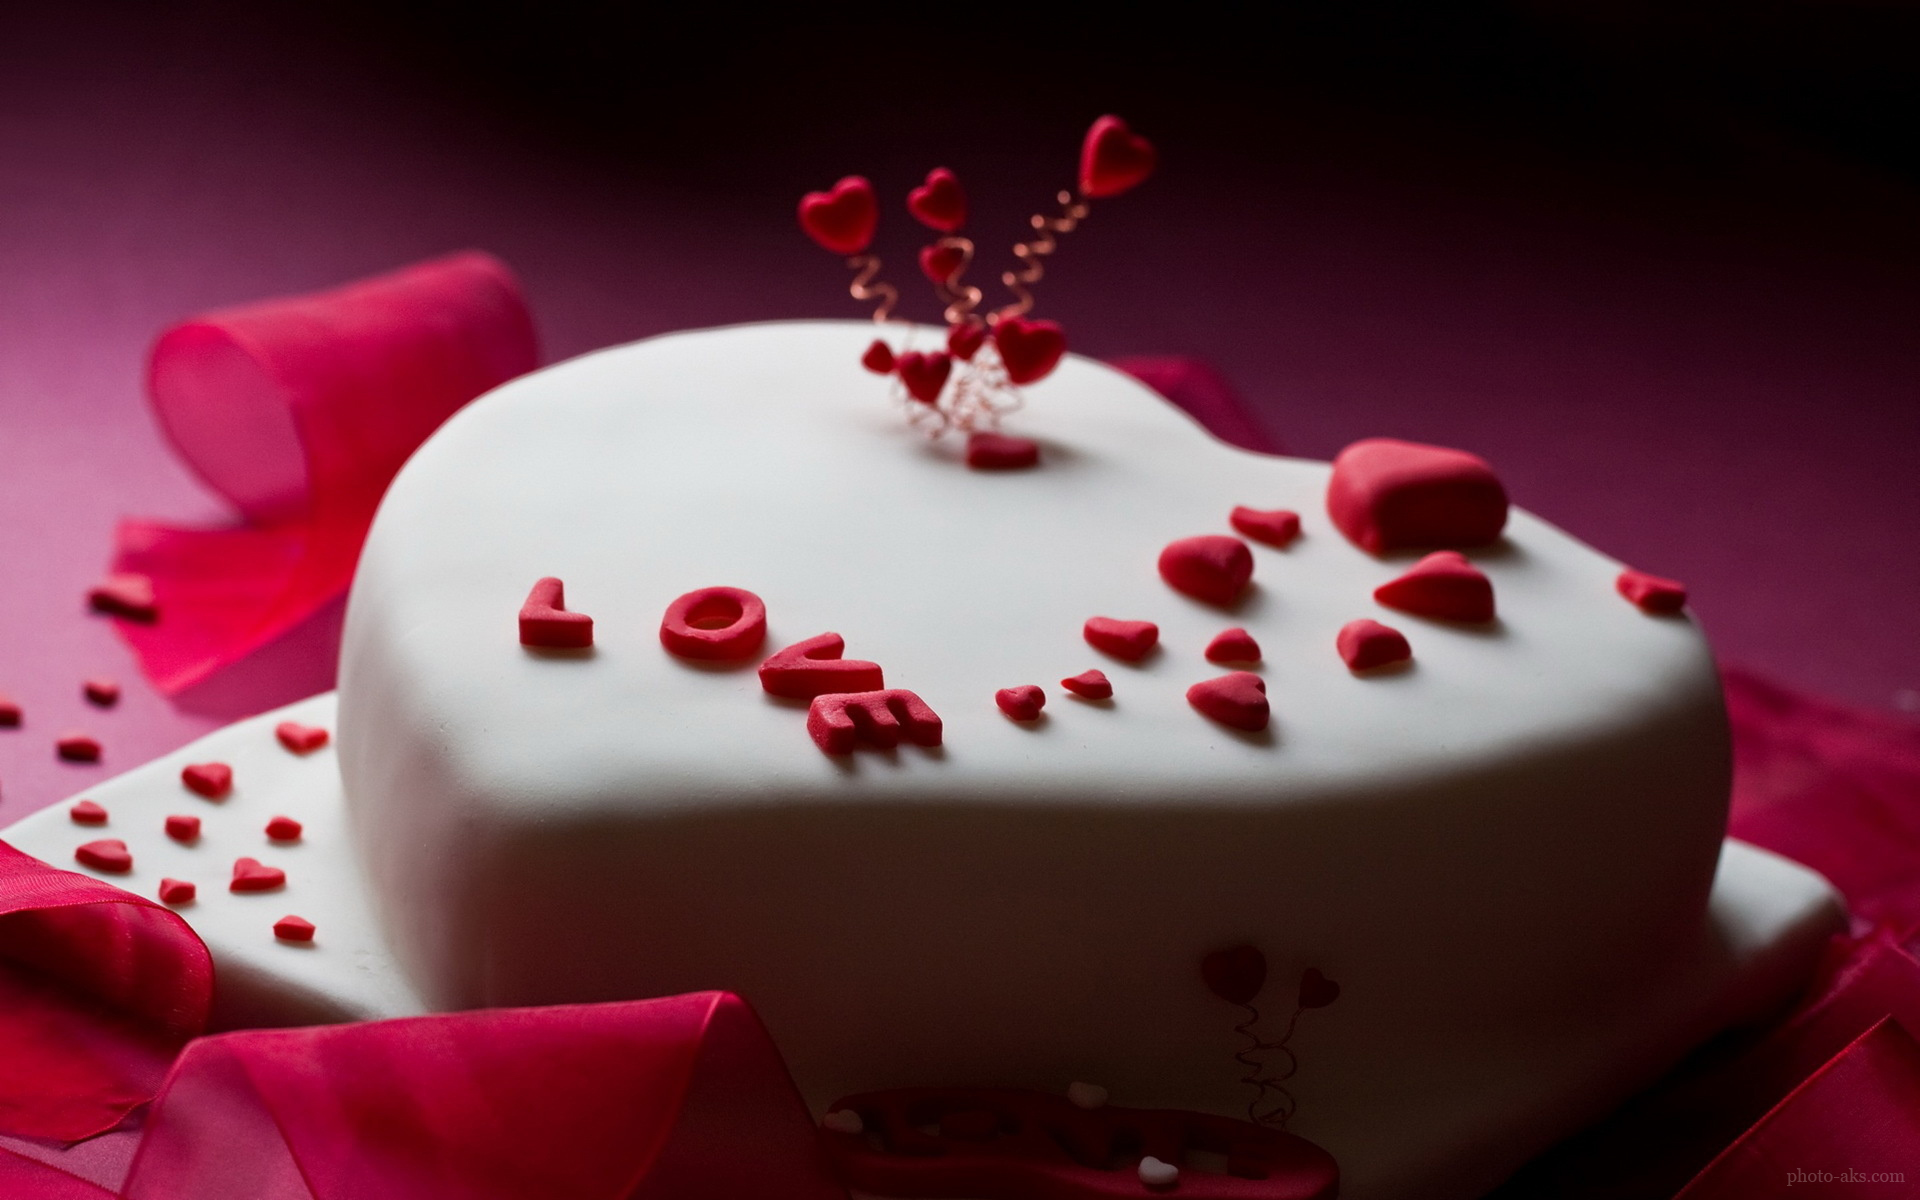 مدل کیک تولد عاشقانه قلب